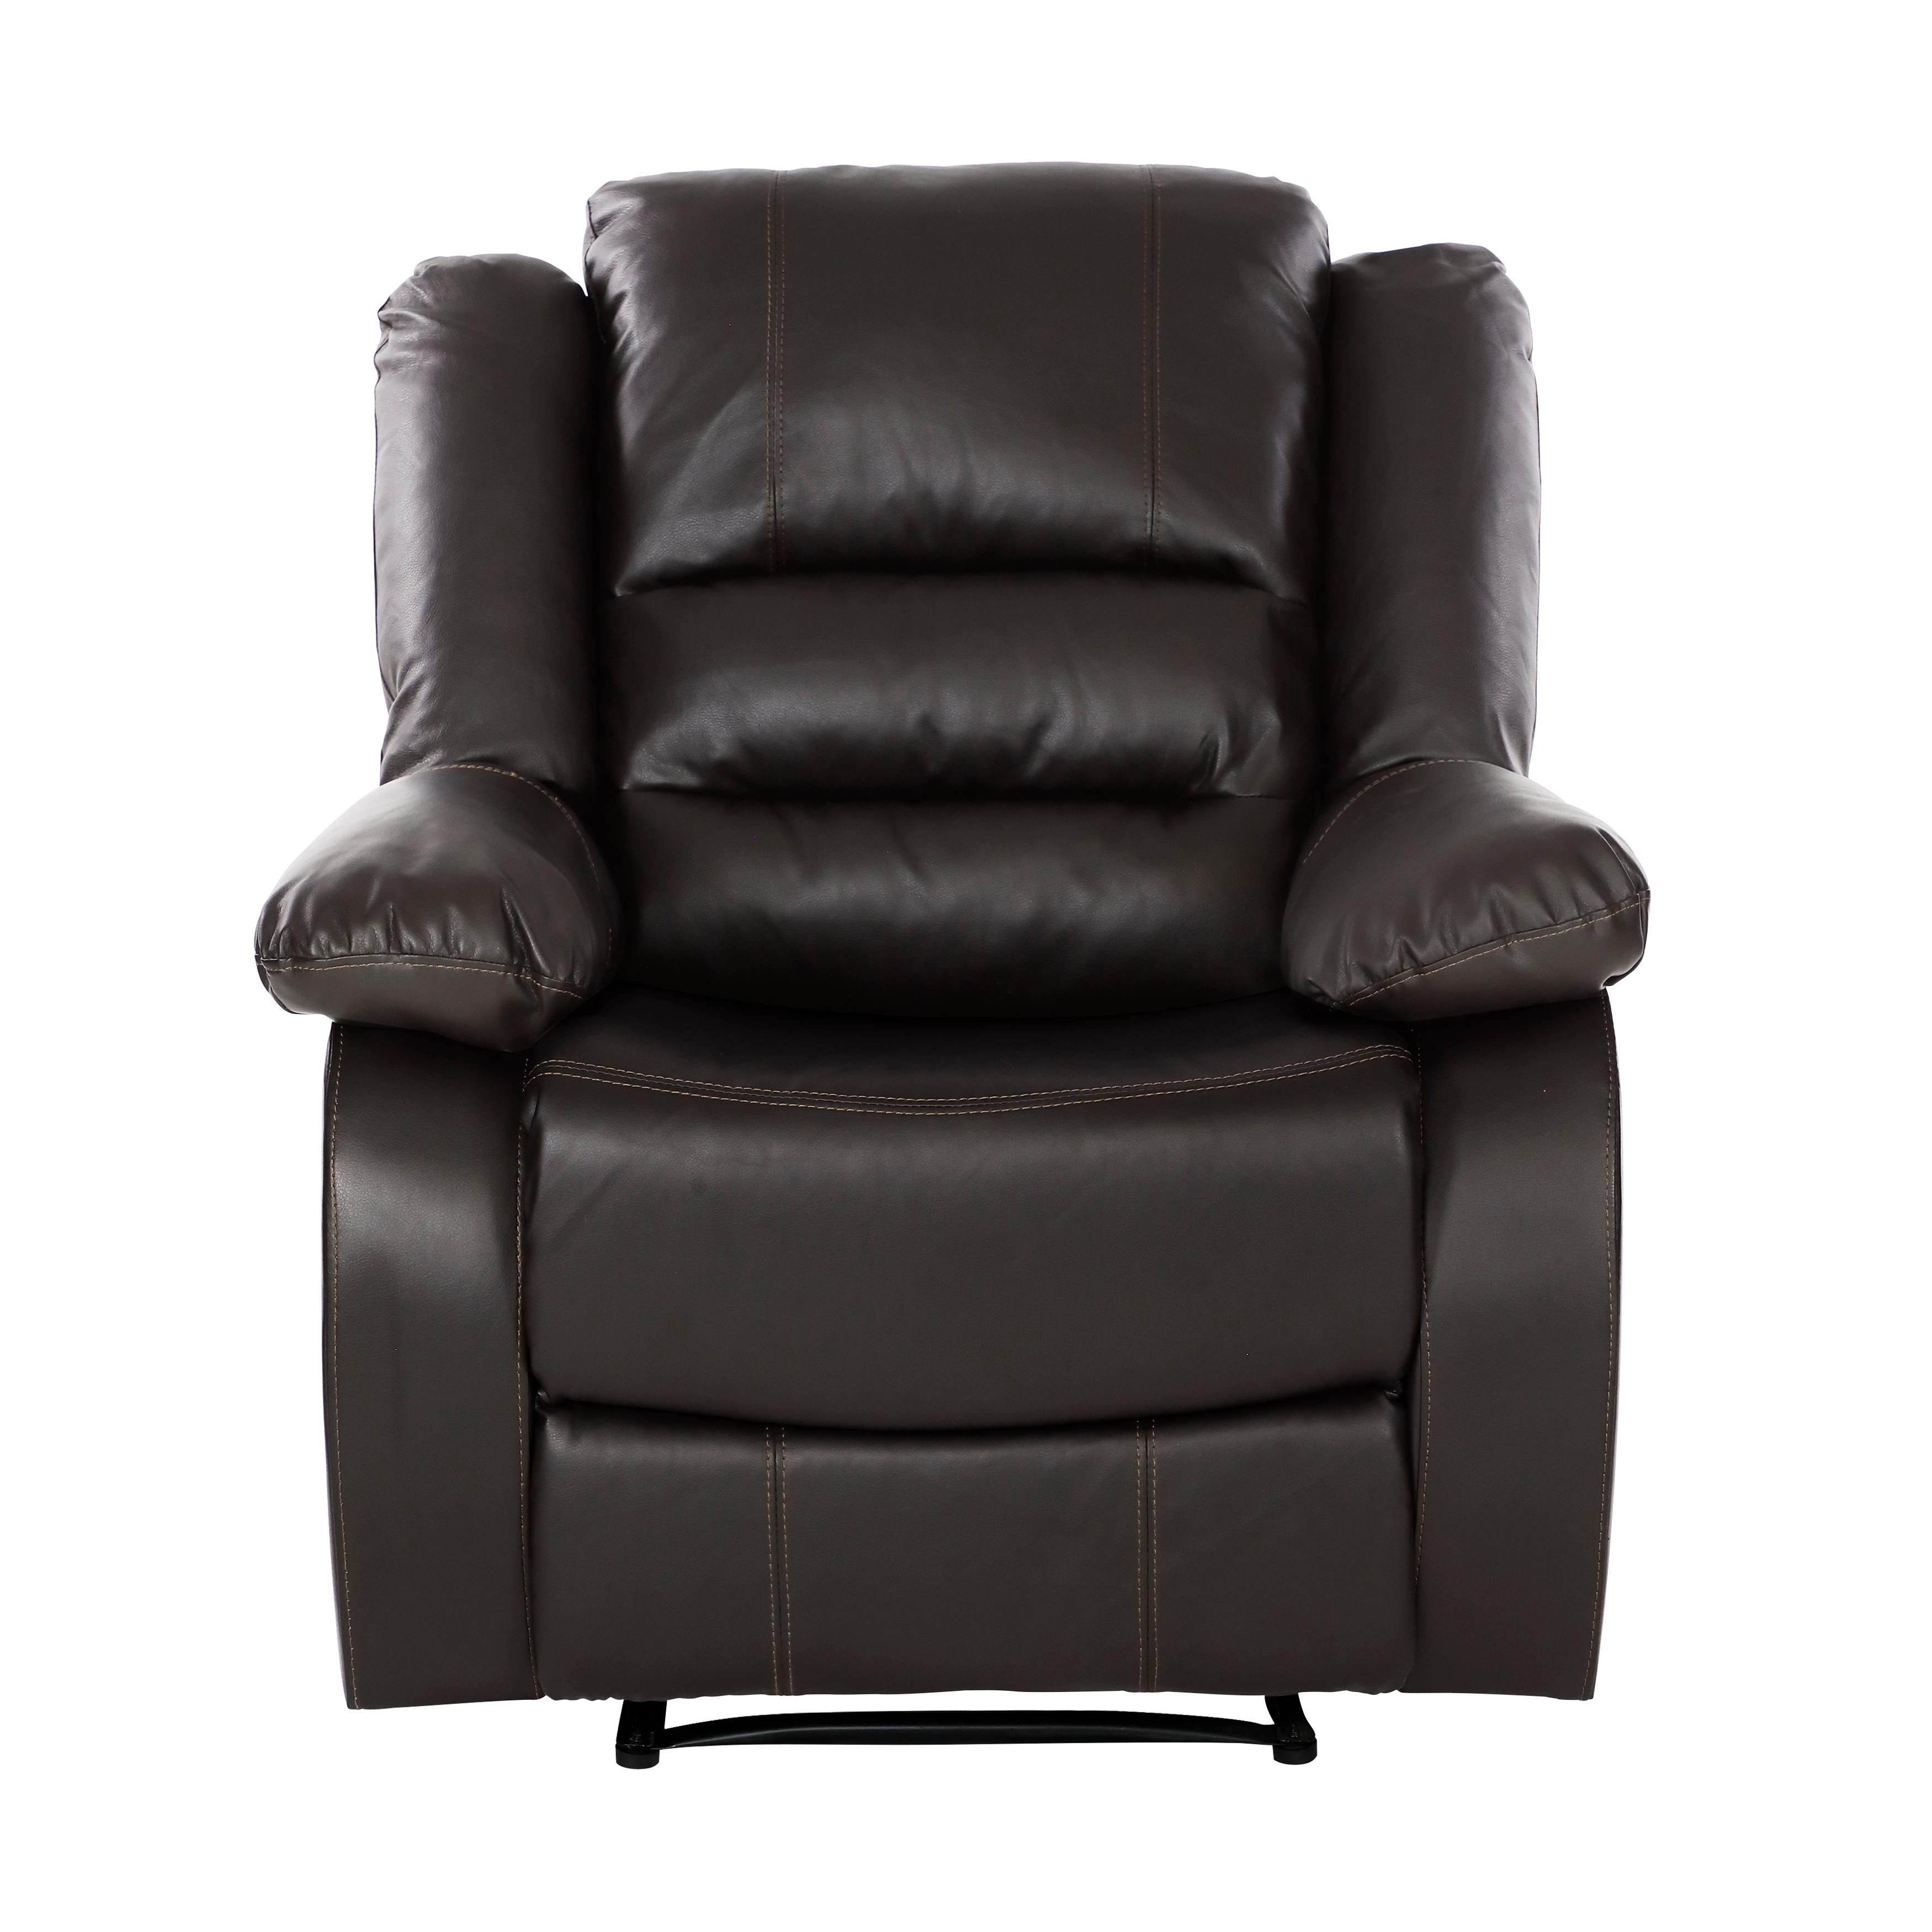   Jarita Recliner Chair 8329BRW-1-C  